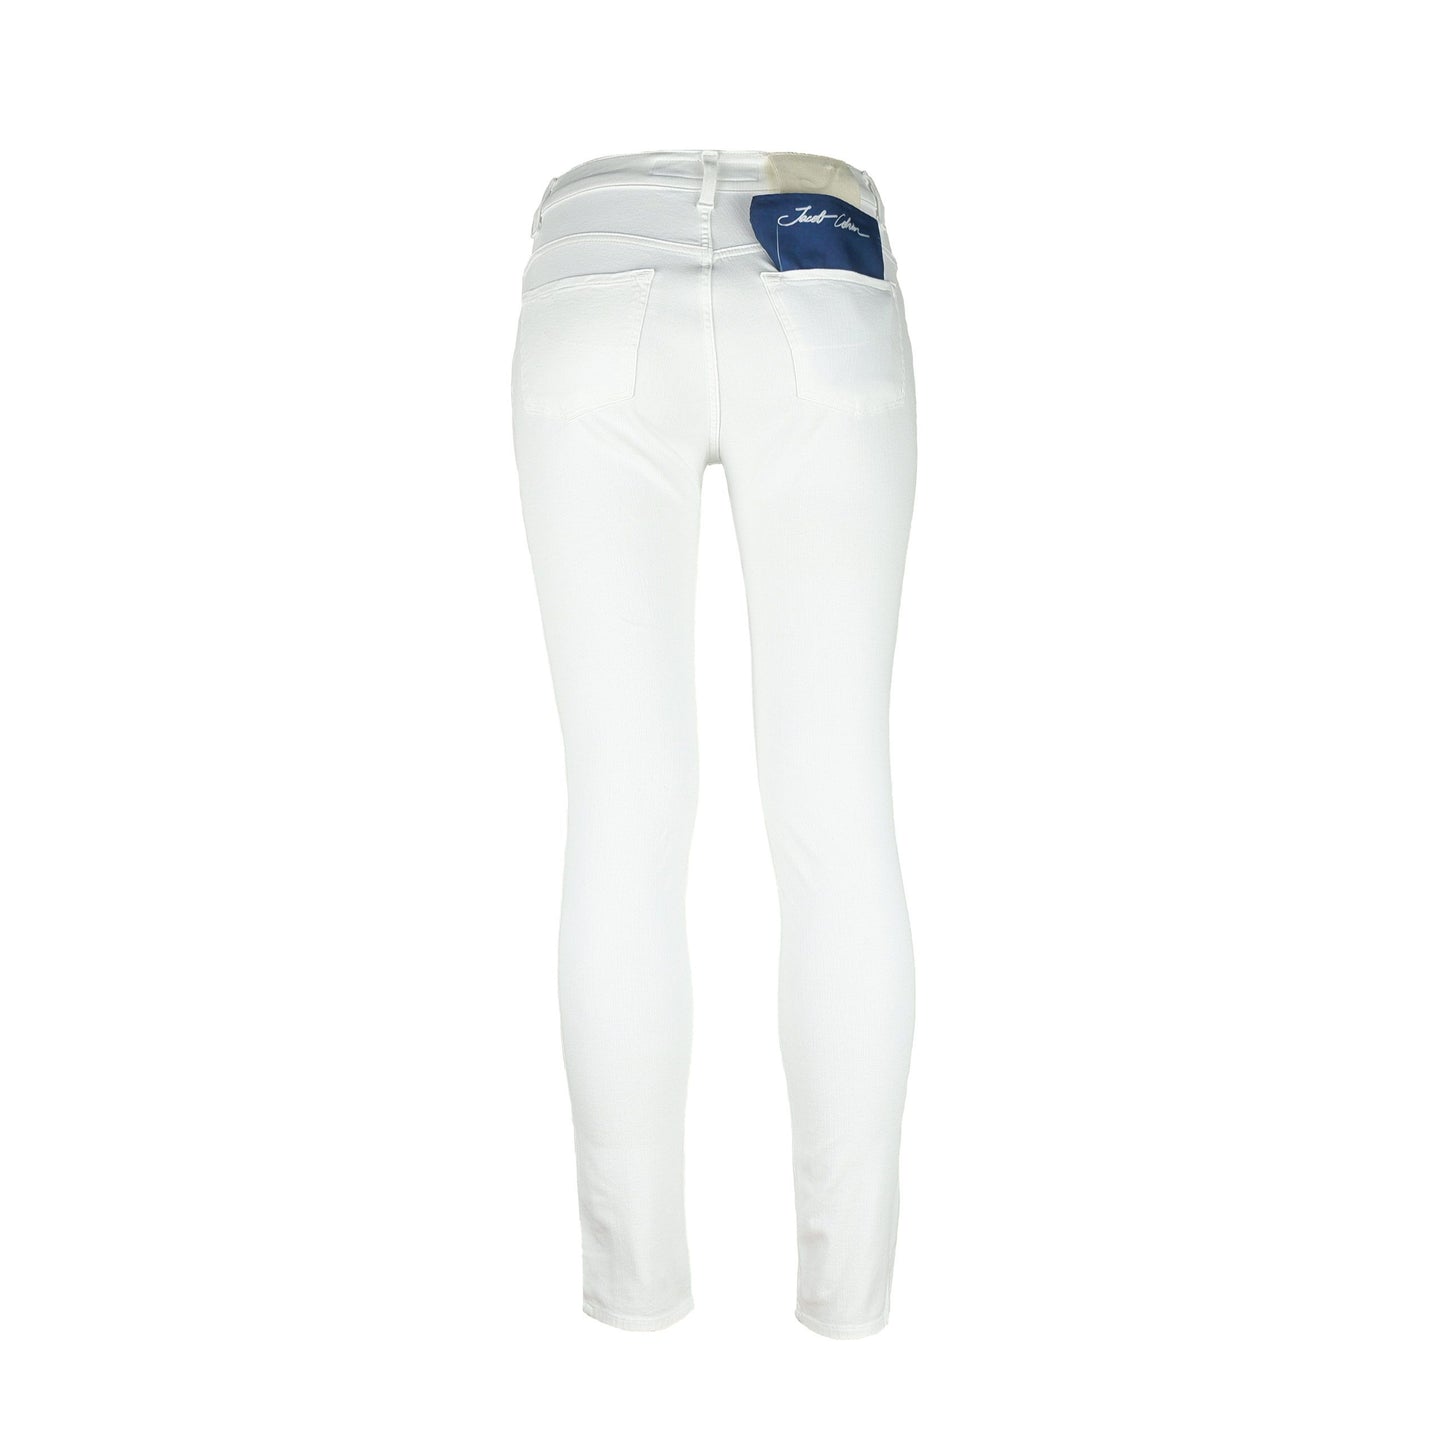 Elegant White Gilda Ladies' Jeans with Pony Skin Patch